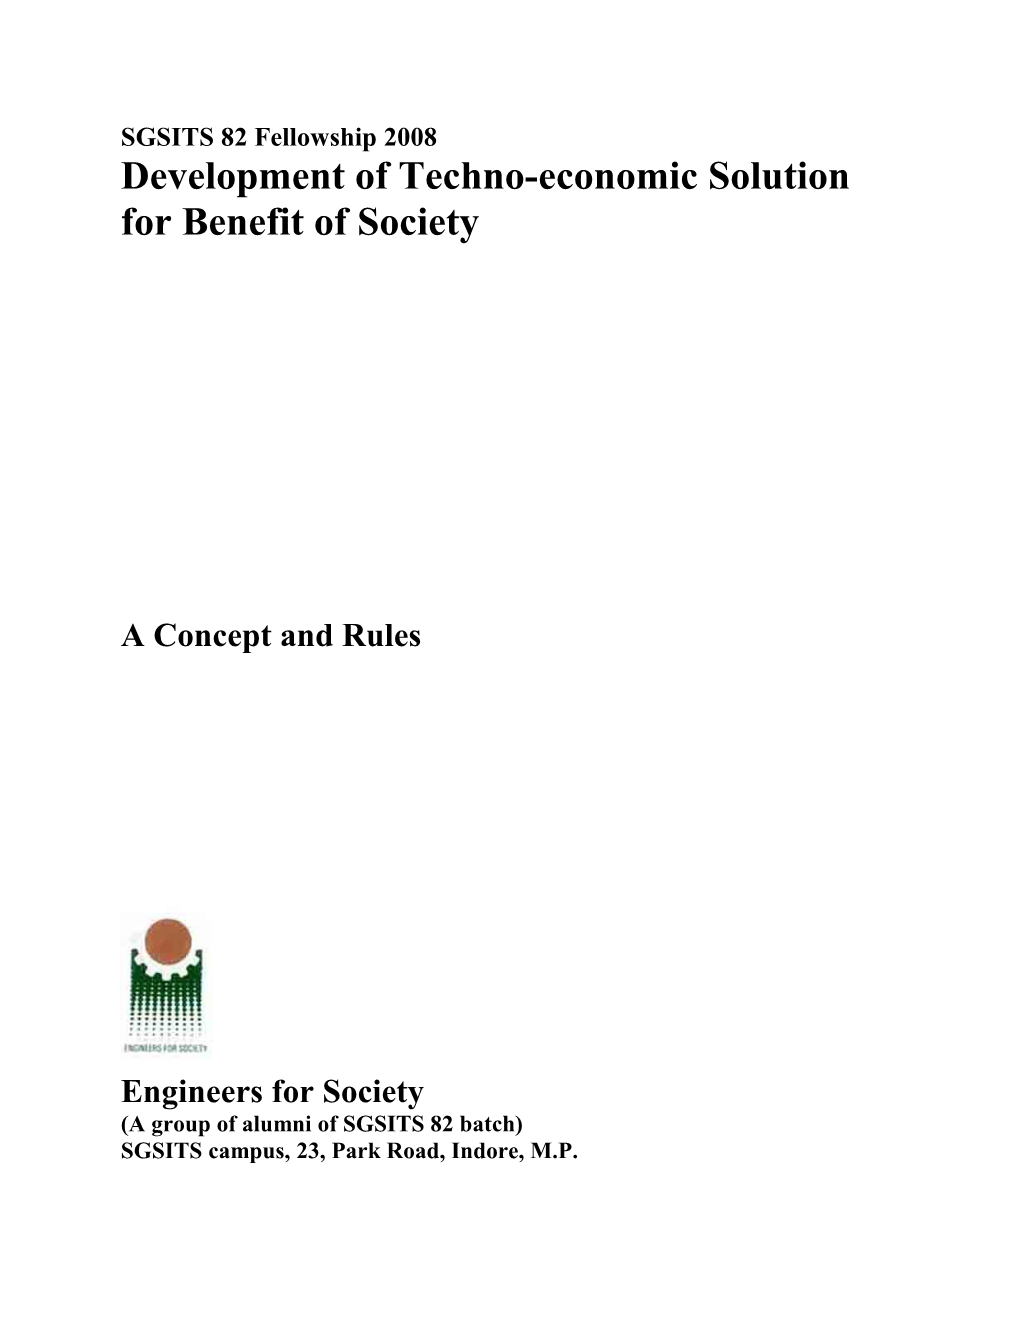 Development of Techno-Economic Solution